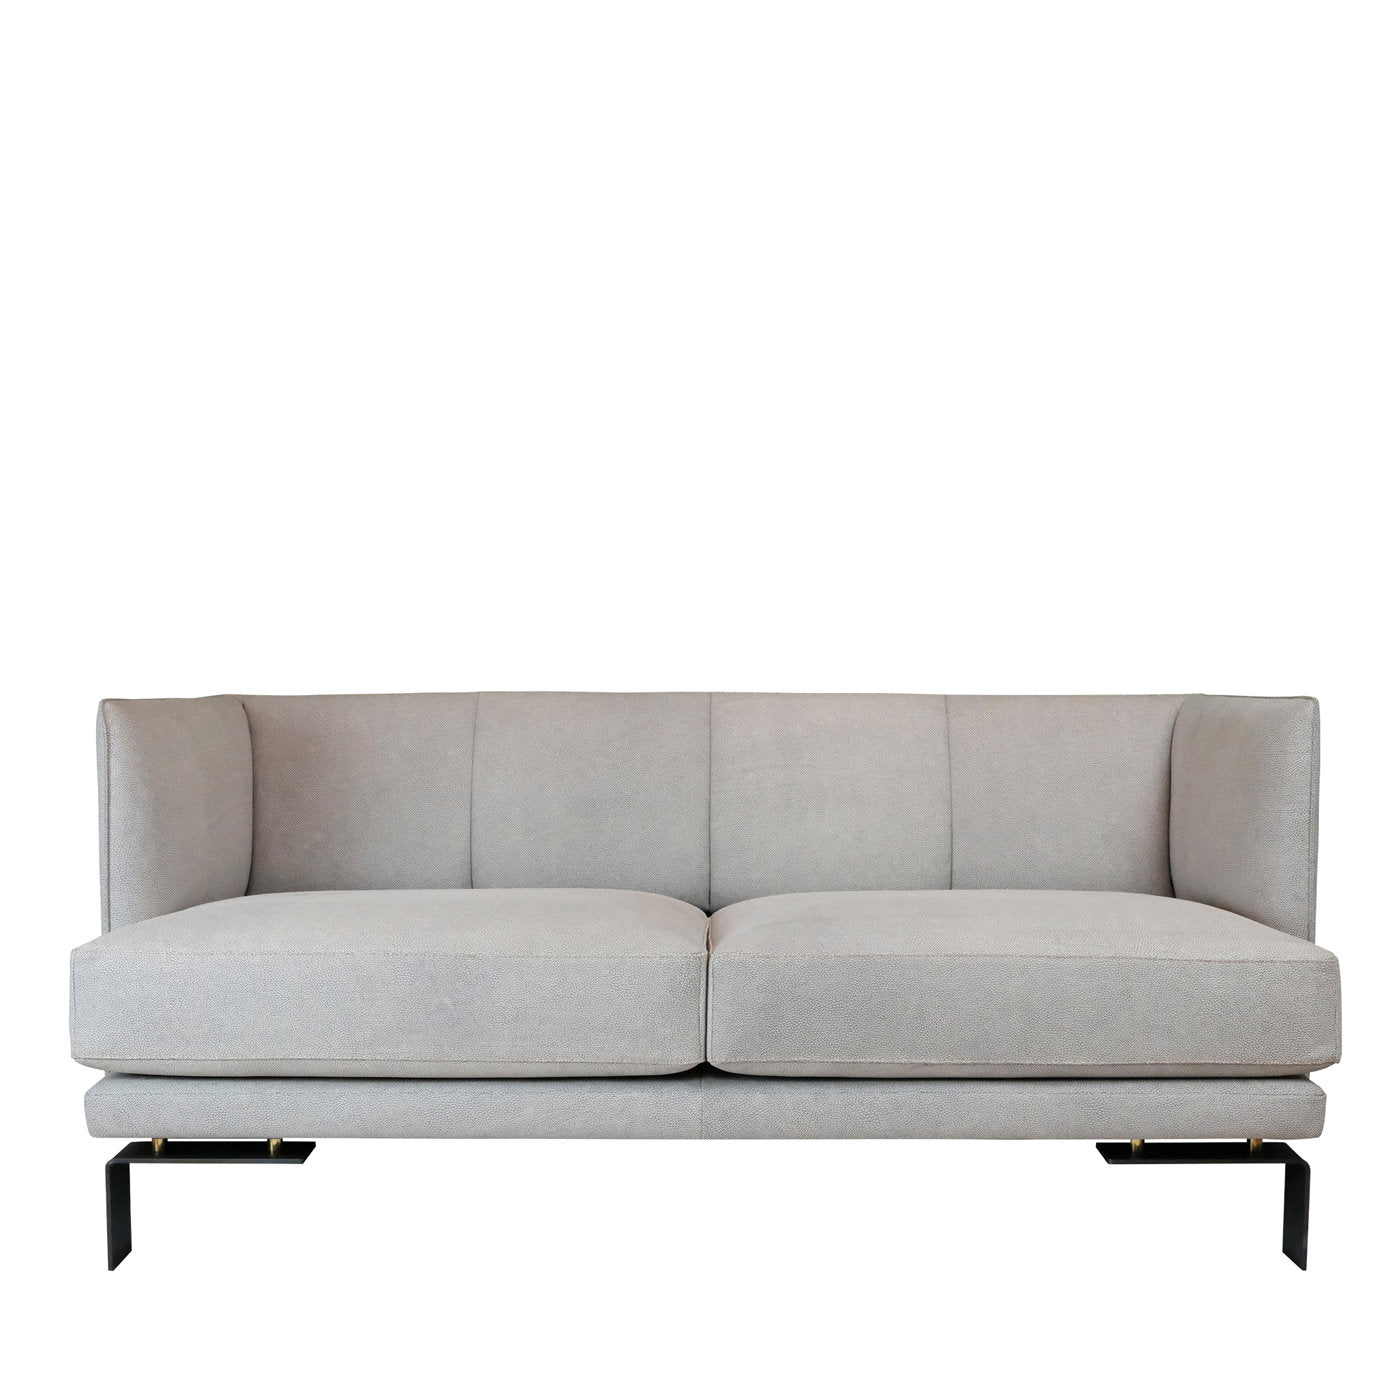 Met Beige Leather Sofa - Main view